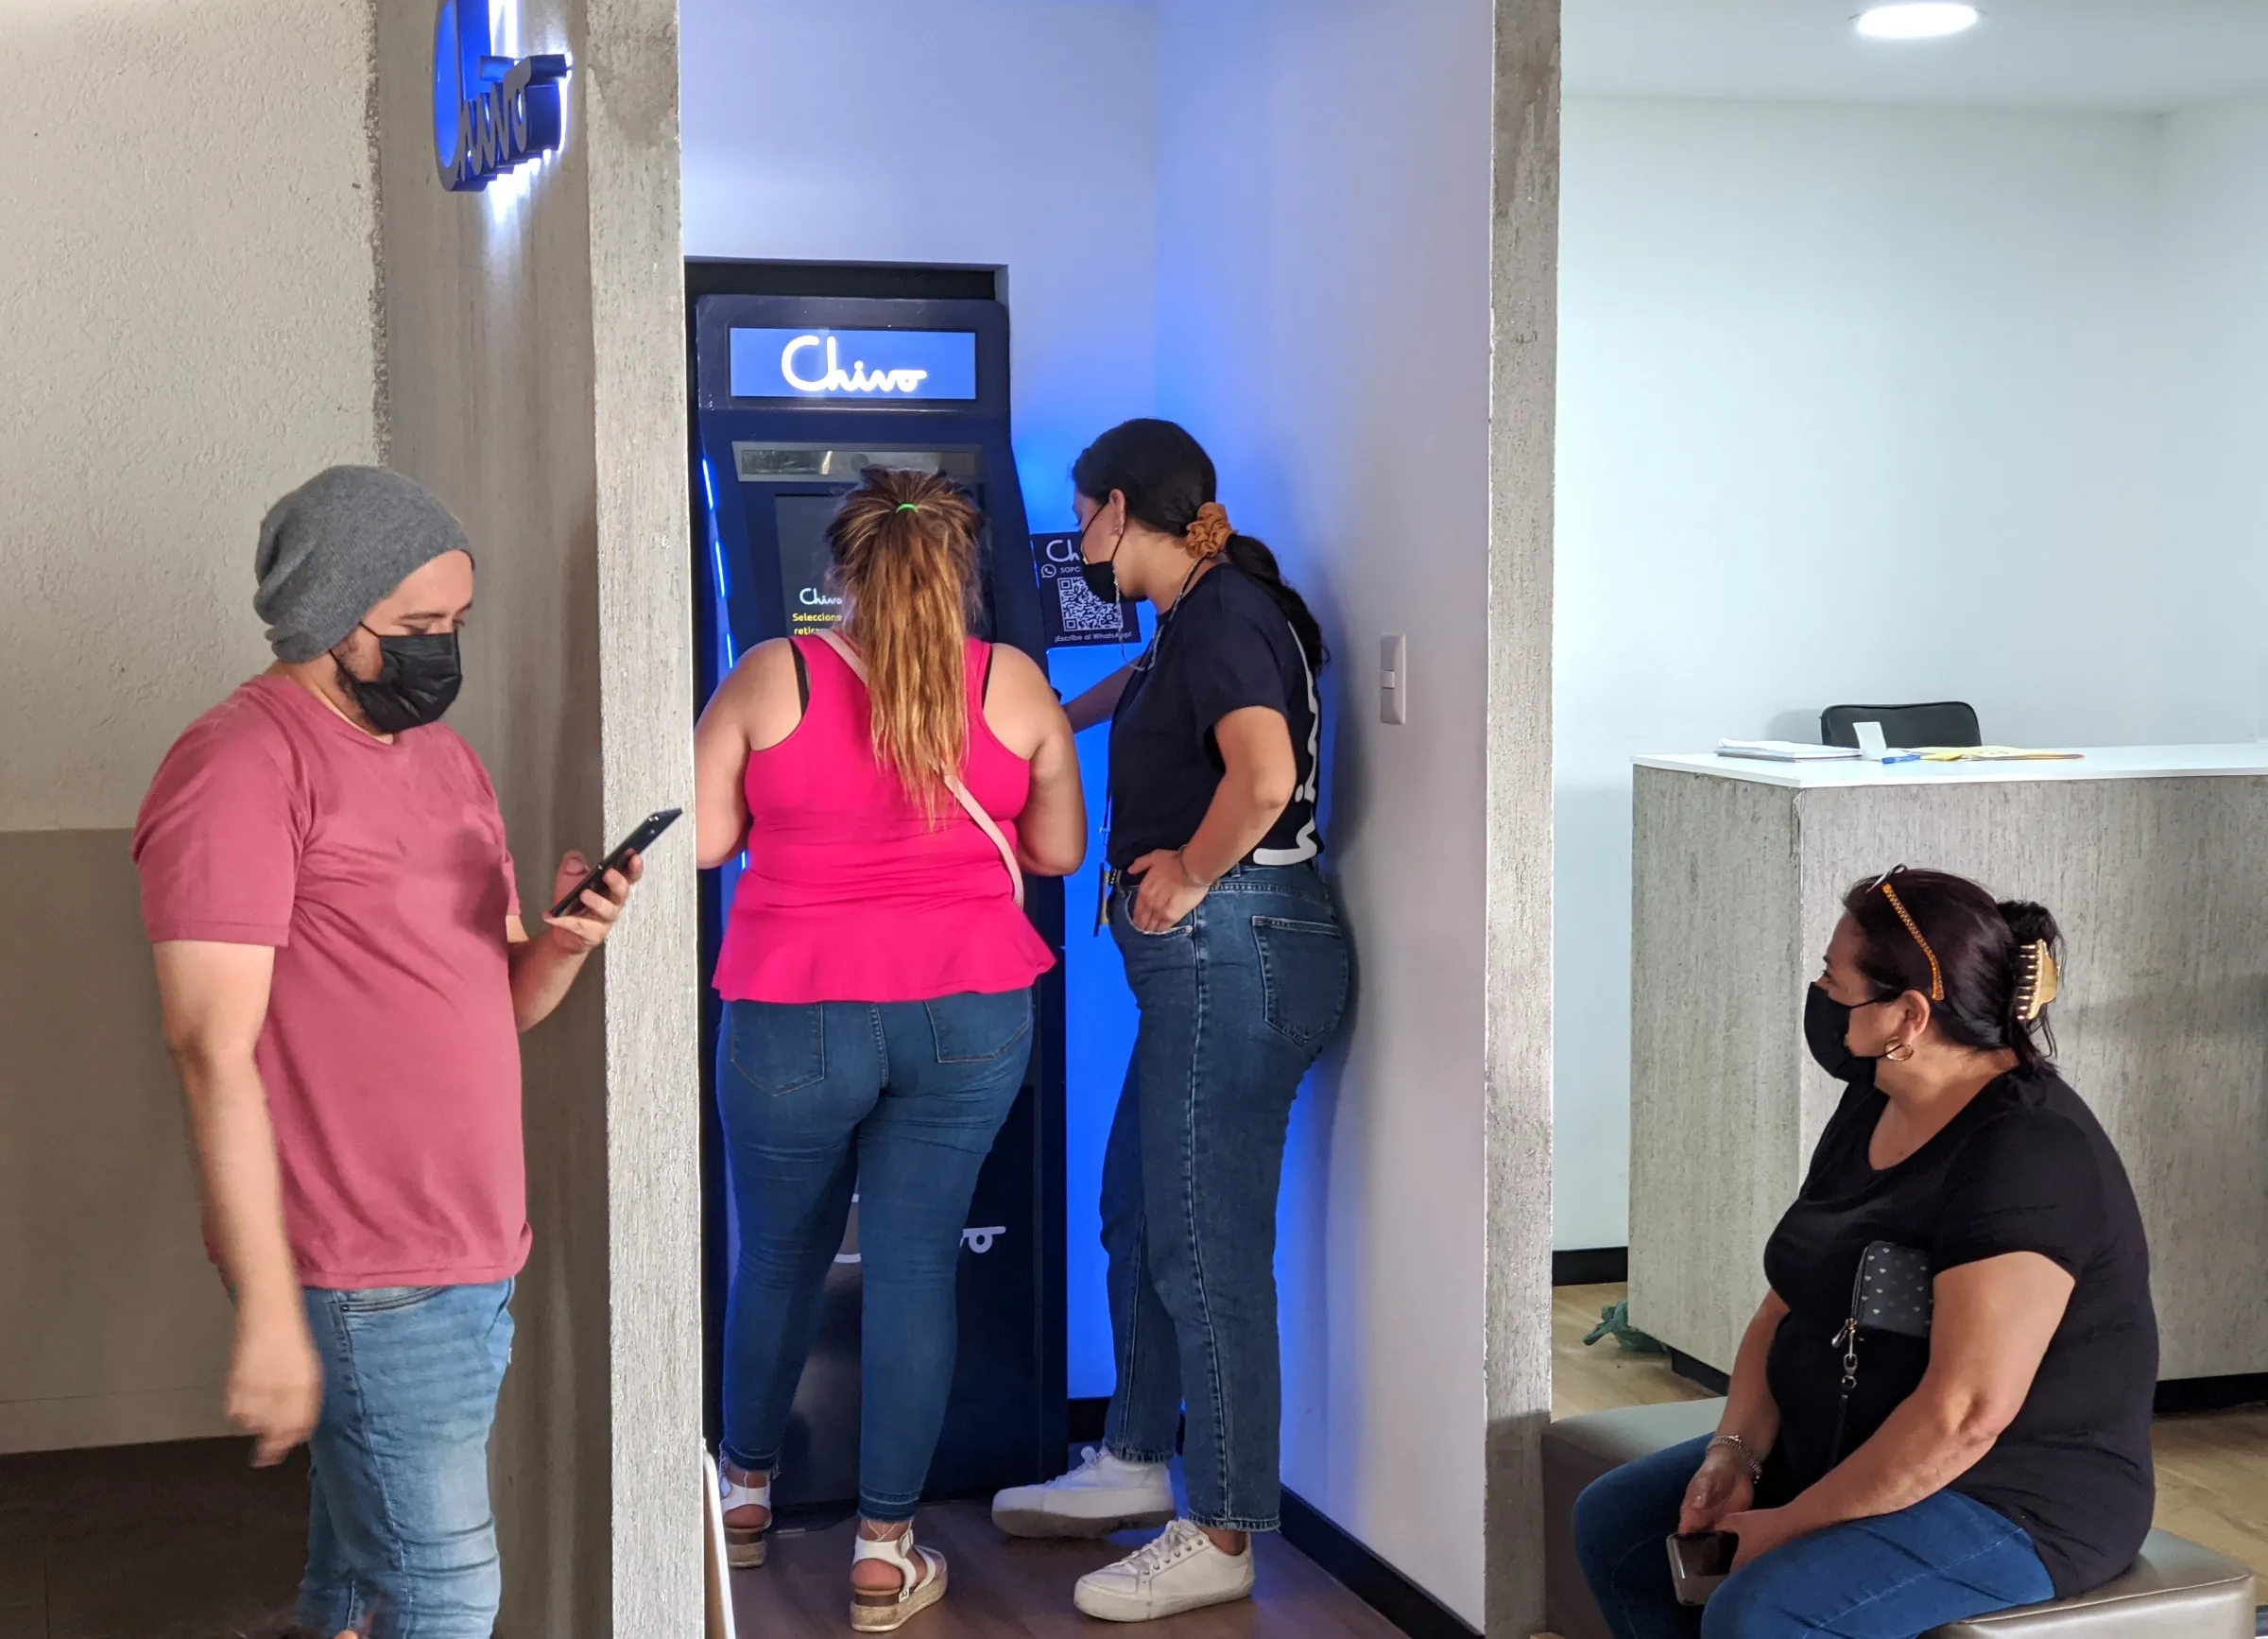 Salvadorans at a Chivo bitcoin cashpoint, San Salvador, El Salvador. September 10, 2021.Thomson Reuters Foundation/Anna-Cat Brigida